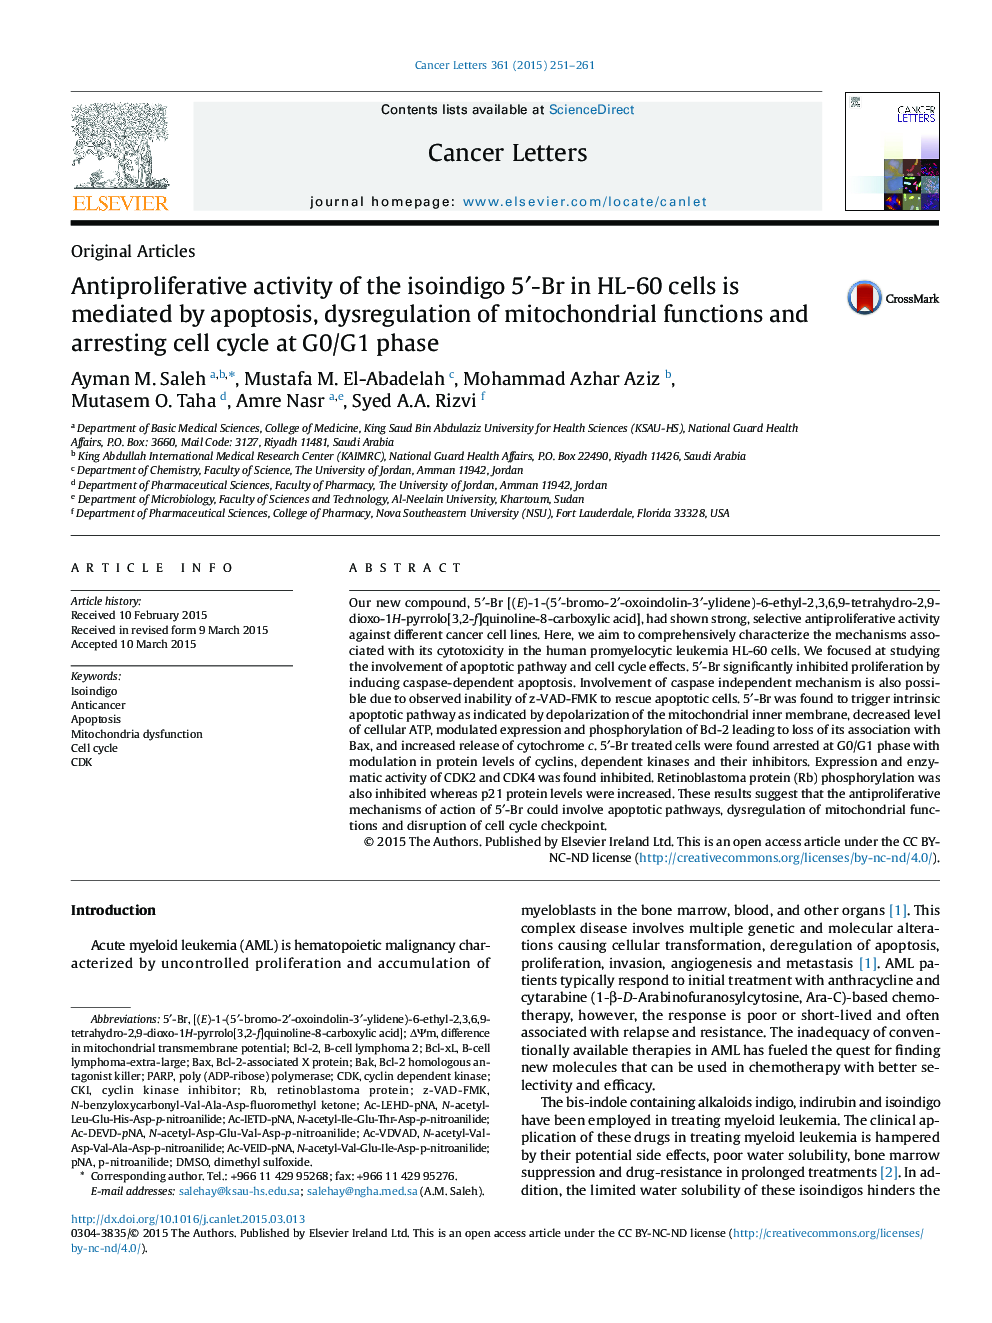 Antiproliferative activity of the isoindigo 5â²-Br in HL-60 cells is mediated by apoptosis, dysregulation of mitochondrial functions and arresting cell cycle at G0/G1 phase